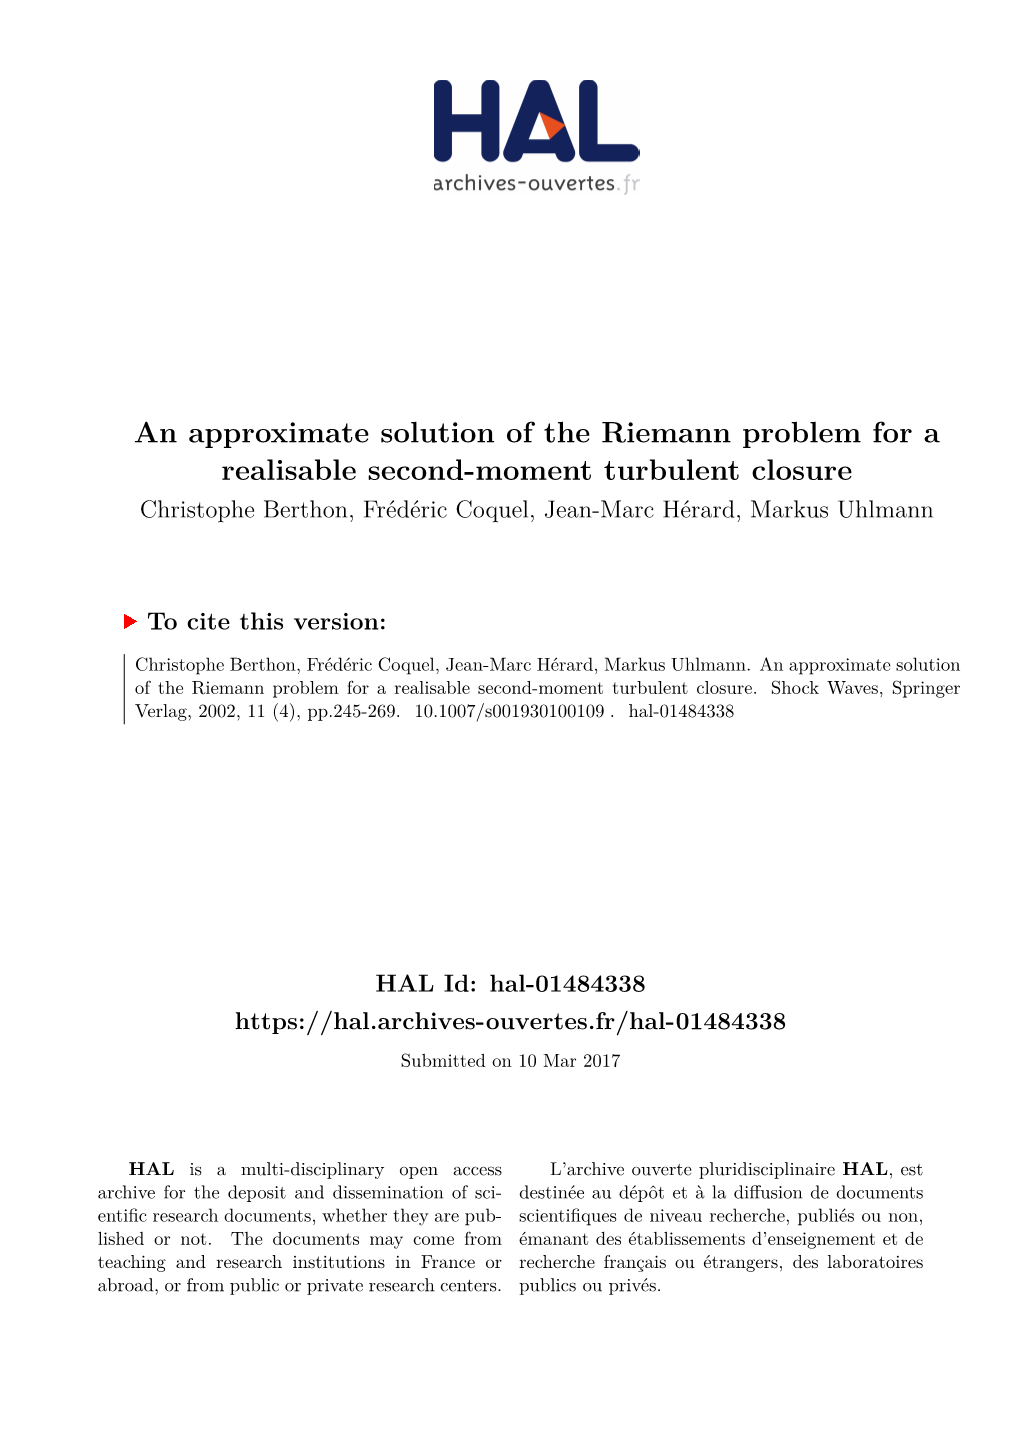 An Approximate Solution of the Riemann Problem for a Realisable Second-Moment Turbulent Closure Christophe Berthon, Frédéric Coquel, Jean-Marc Hérard, Markus Uhlmann